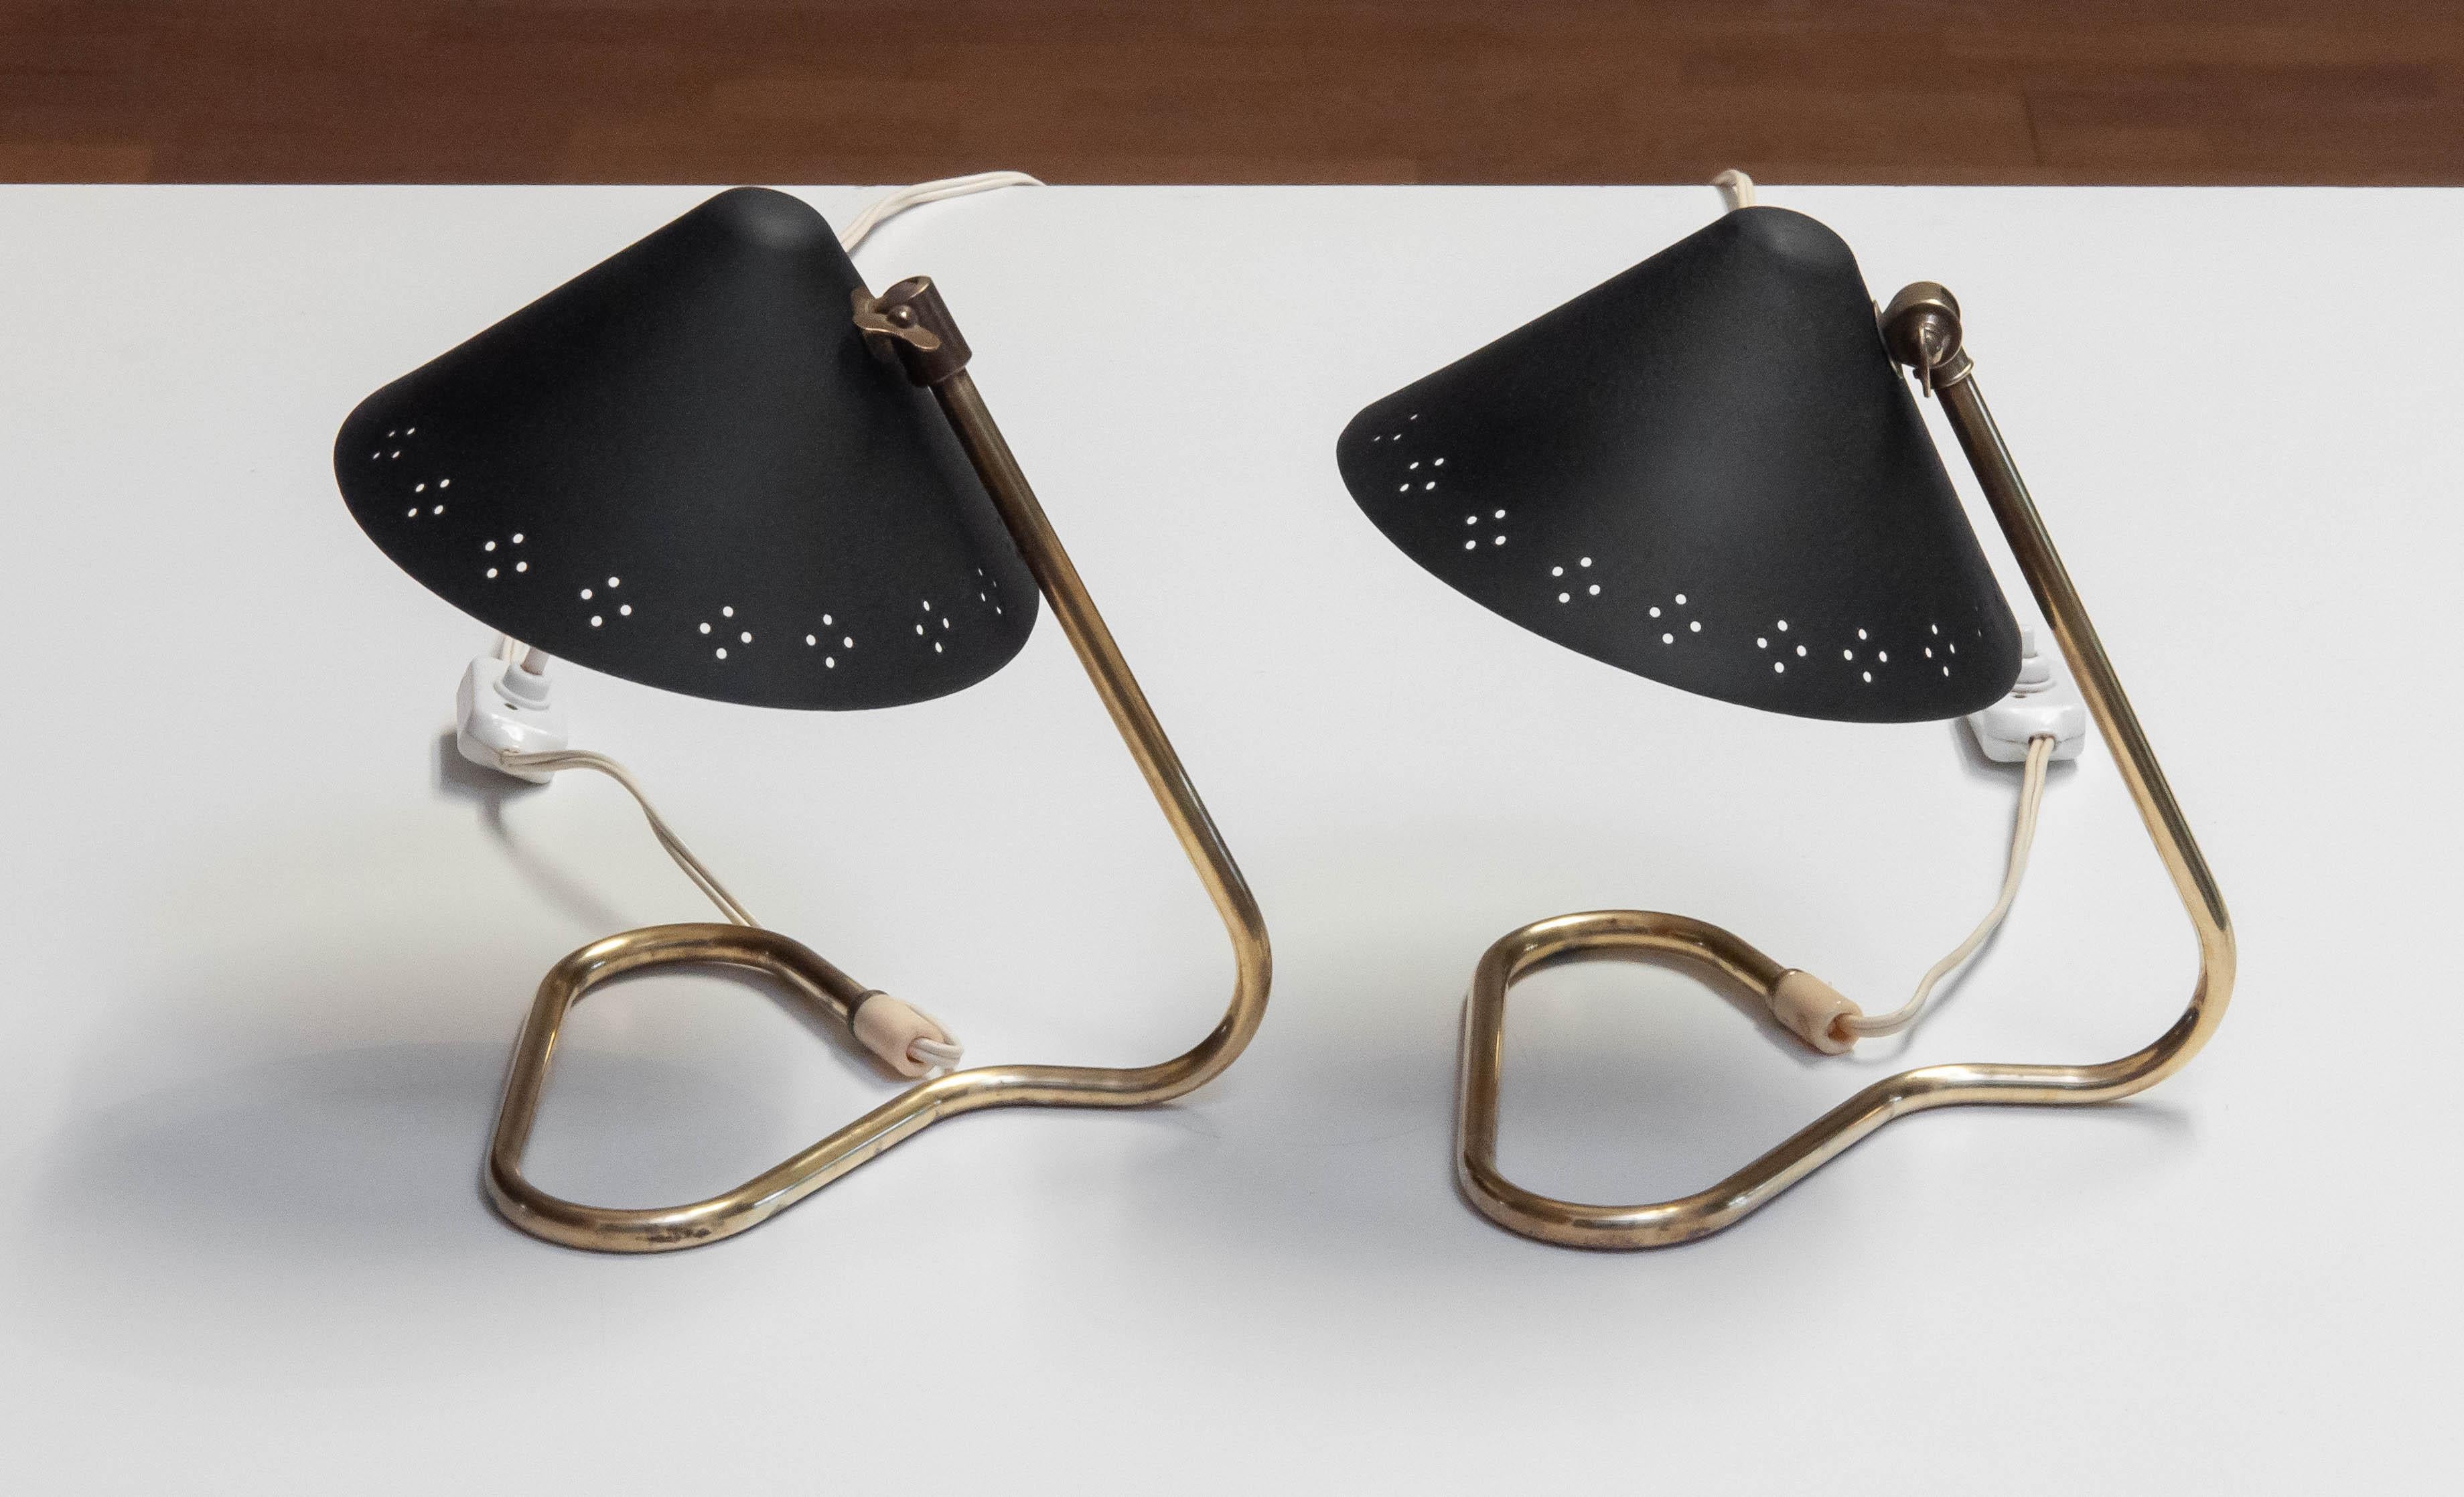 1950s Pair Black With Brass 'Model GK14' Table Lamps By Erik Wärnå For Gnosjö For Sale 2